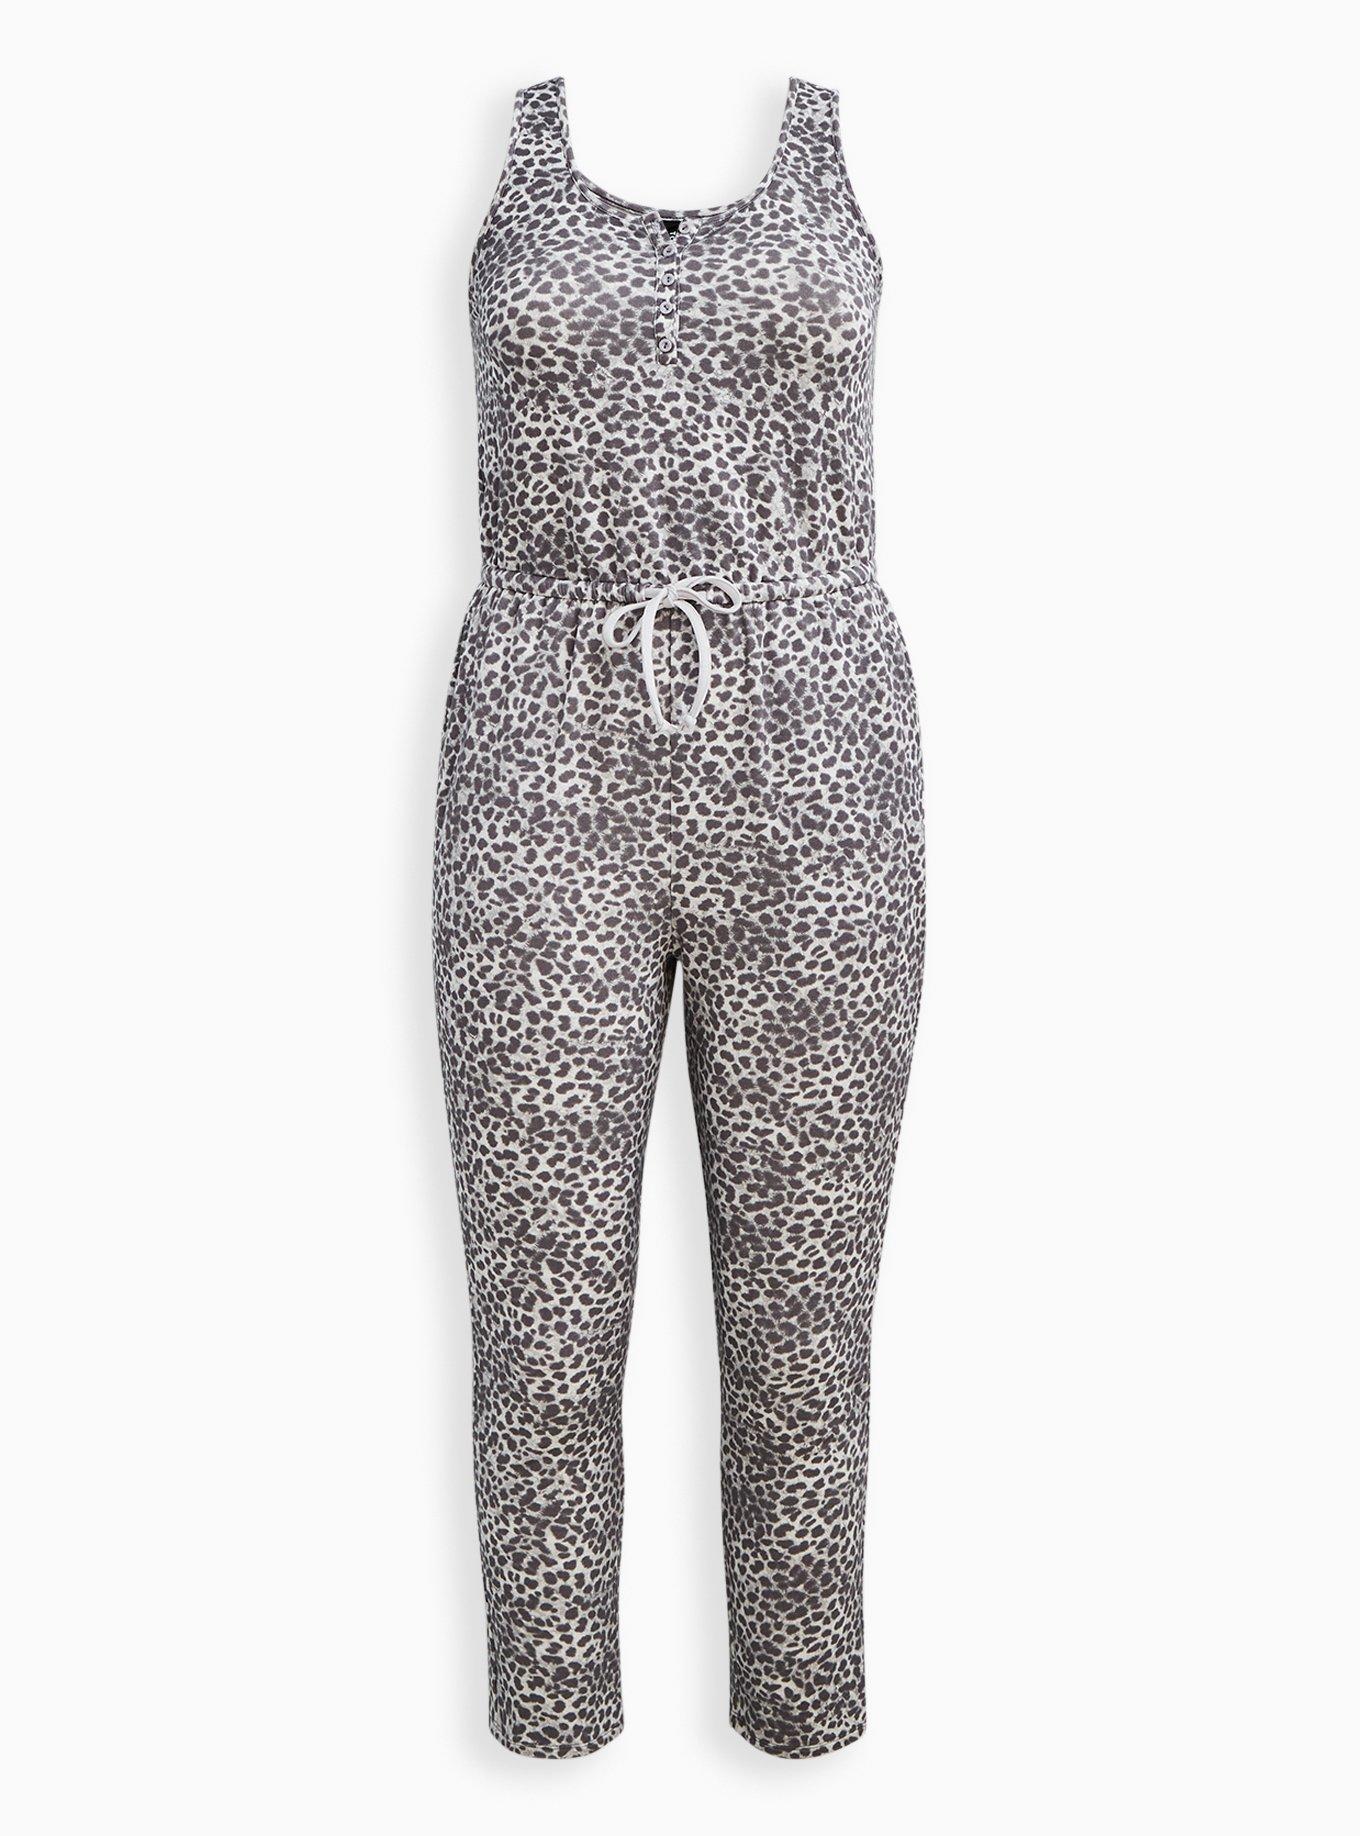 Plus Size - Sleep Jumpsuit - Micro Modal Terry Leopard Grey - Torrid